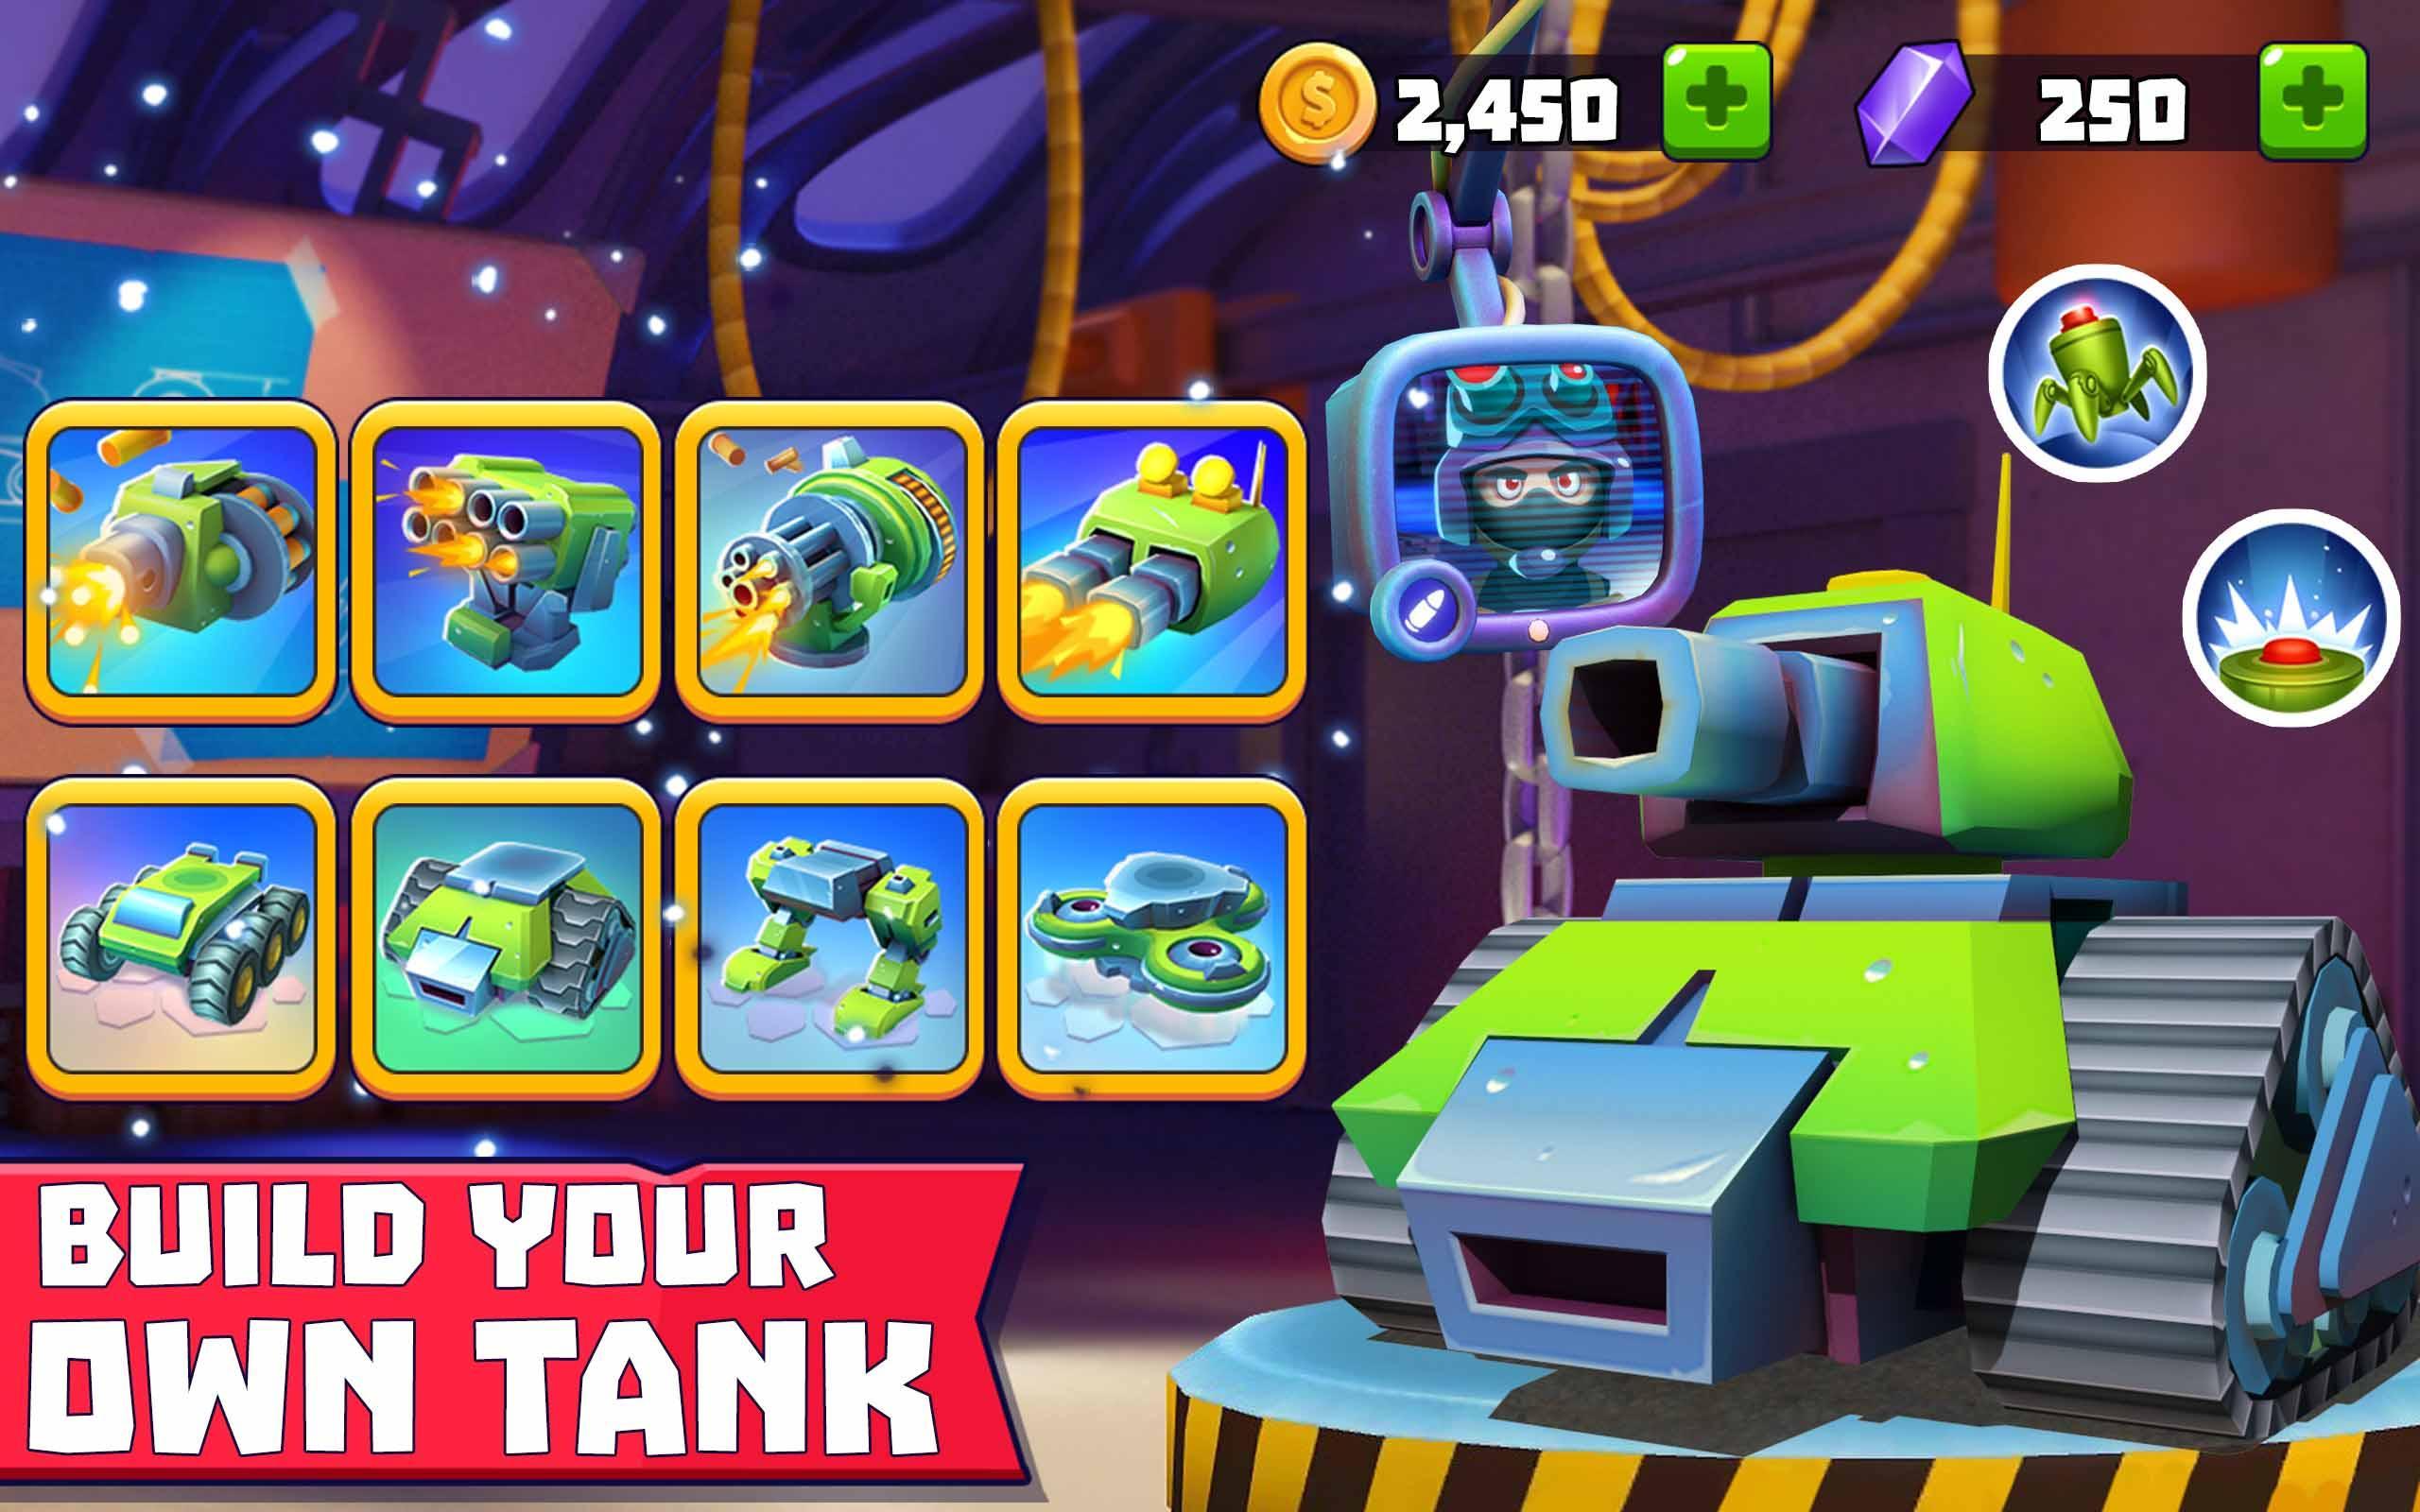 Tanks A Lot! - Realtime Multiplayer Battle Arena 2.56 Screenshot 18